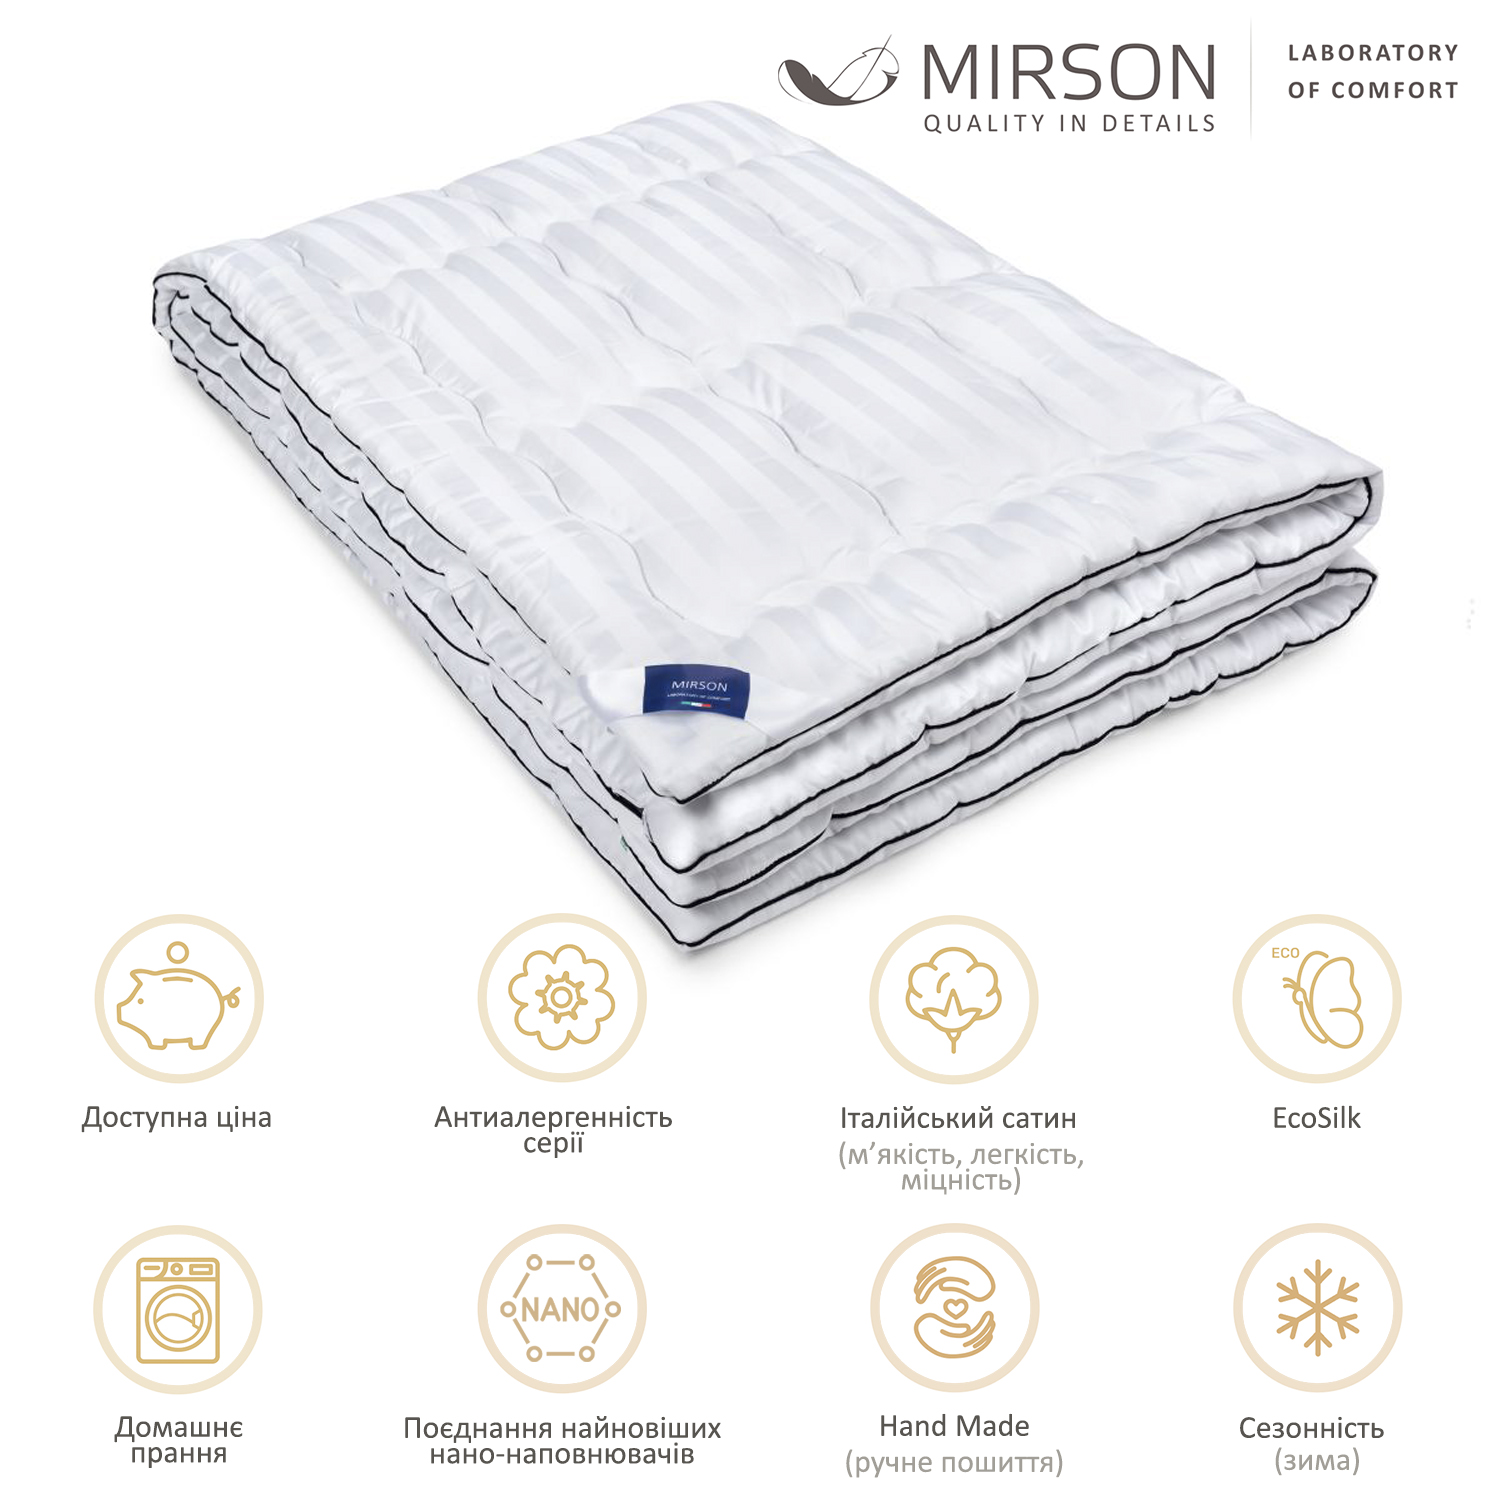 Одеяло антиаллергенное MirSon Premium Royal Pearl Hand Made №069, зимнее, 110x140 см, белое (58590052) - фото 5